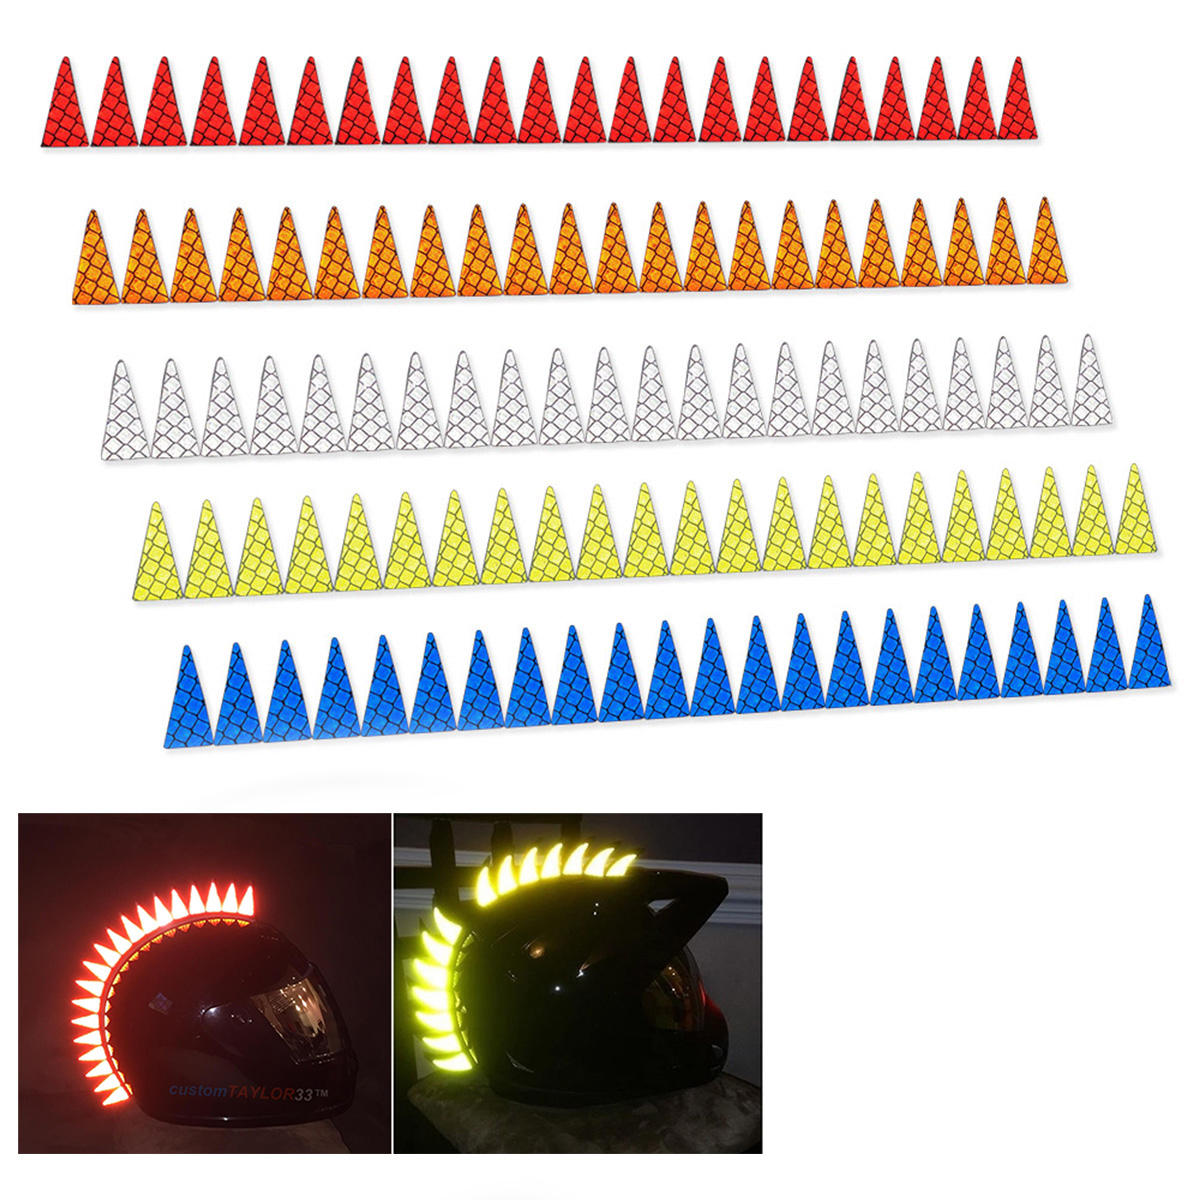 22 messen Mohawk Warhawk spikes zaag reflecterende sticker stickers voor rubberen helm motorfiets fi